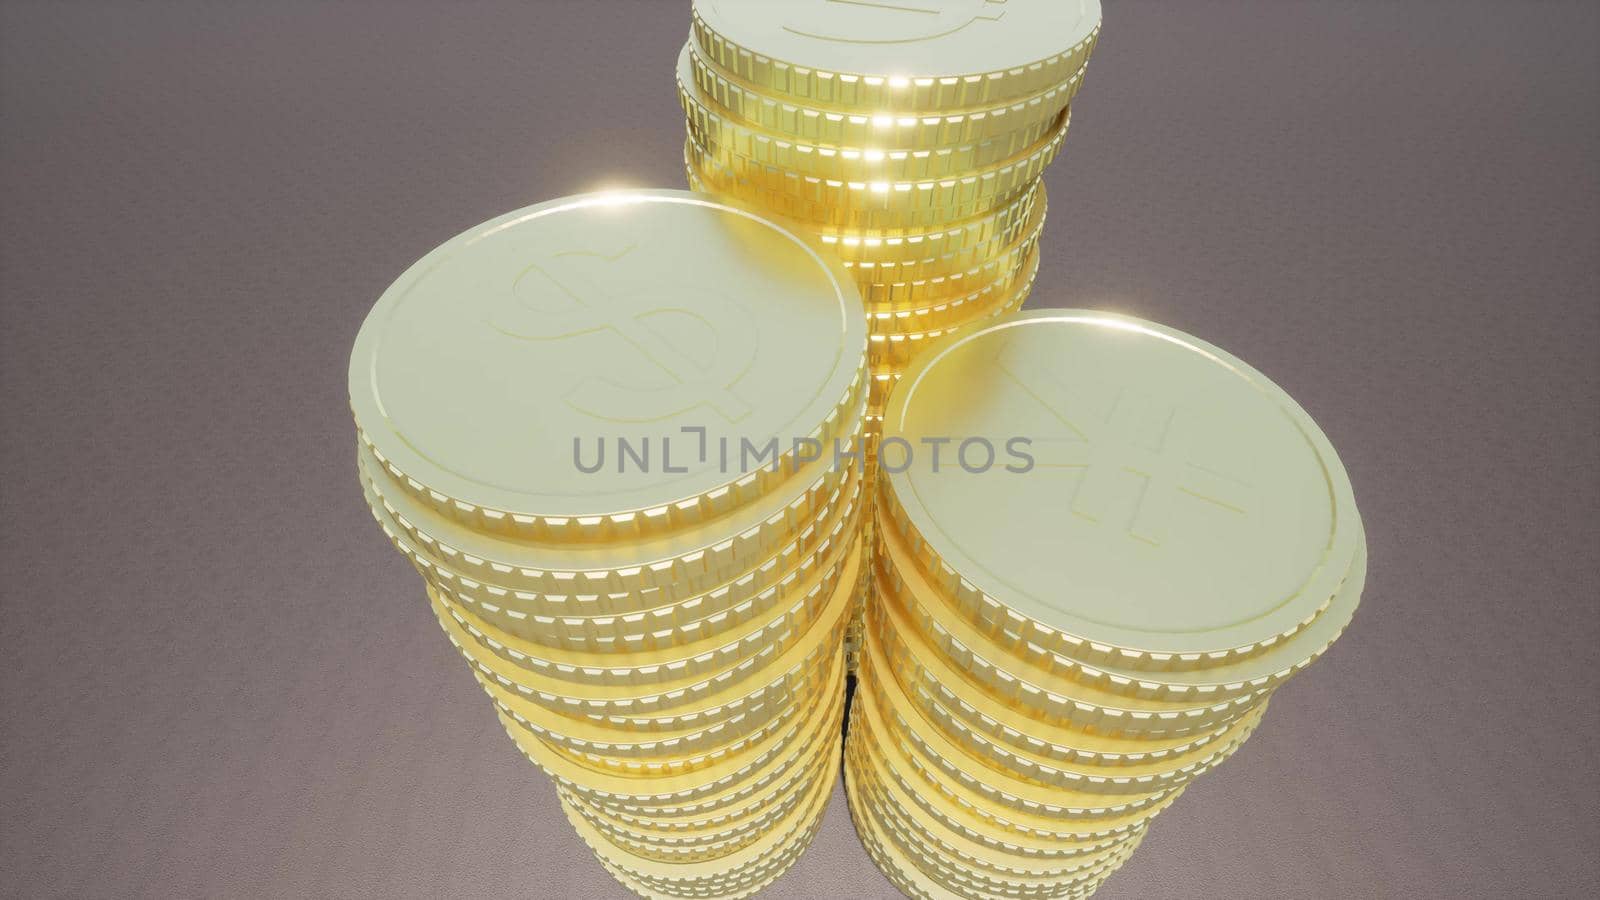 Column gold coins Concept: business cash currency 3d render